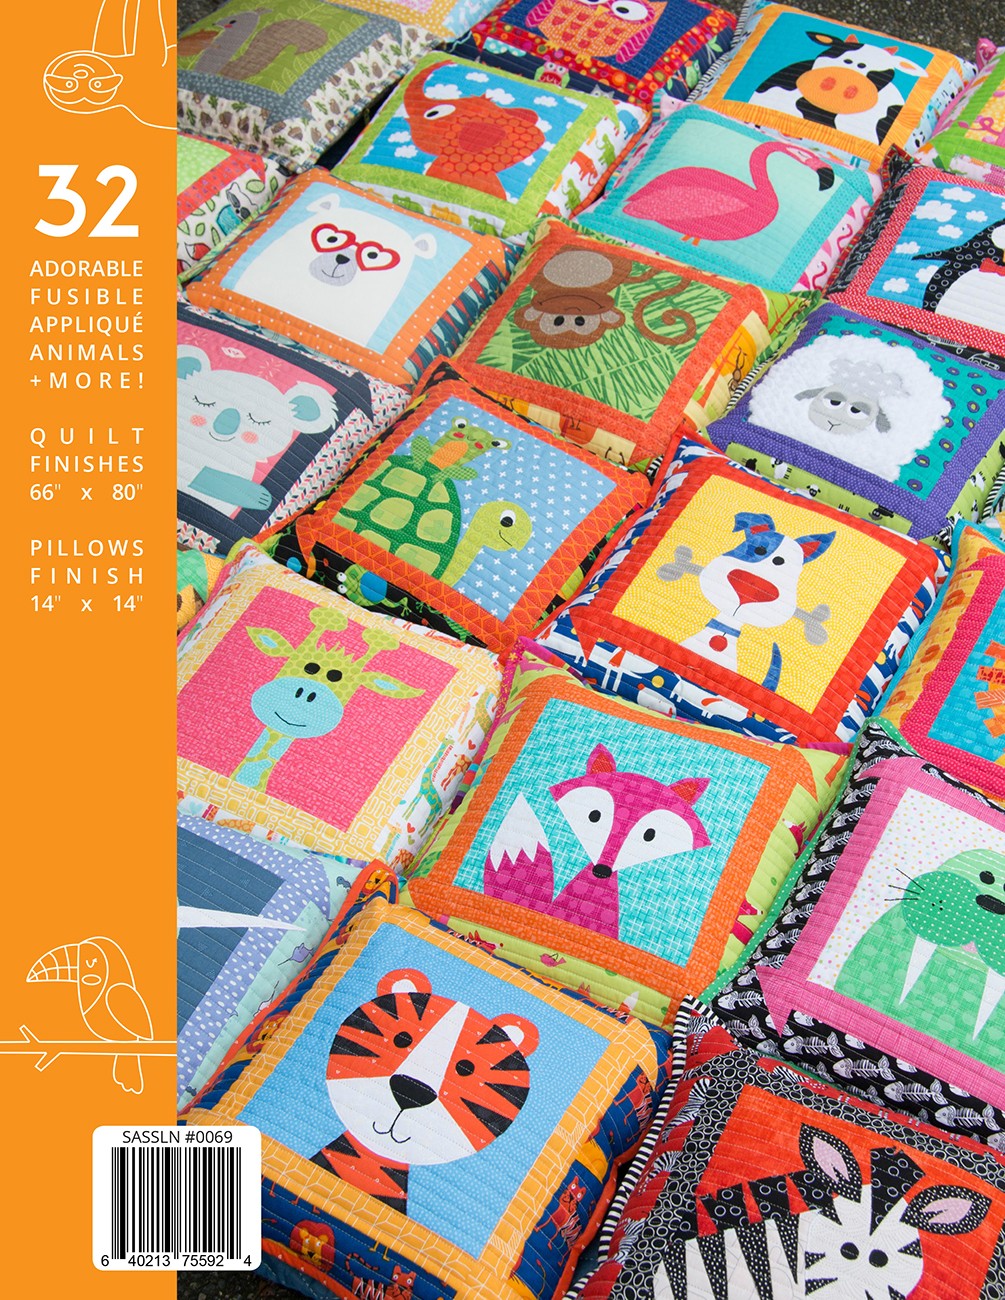 Zootropolis Applique Quilt Pattern Book by Sassafras Lane Designs